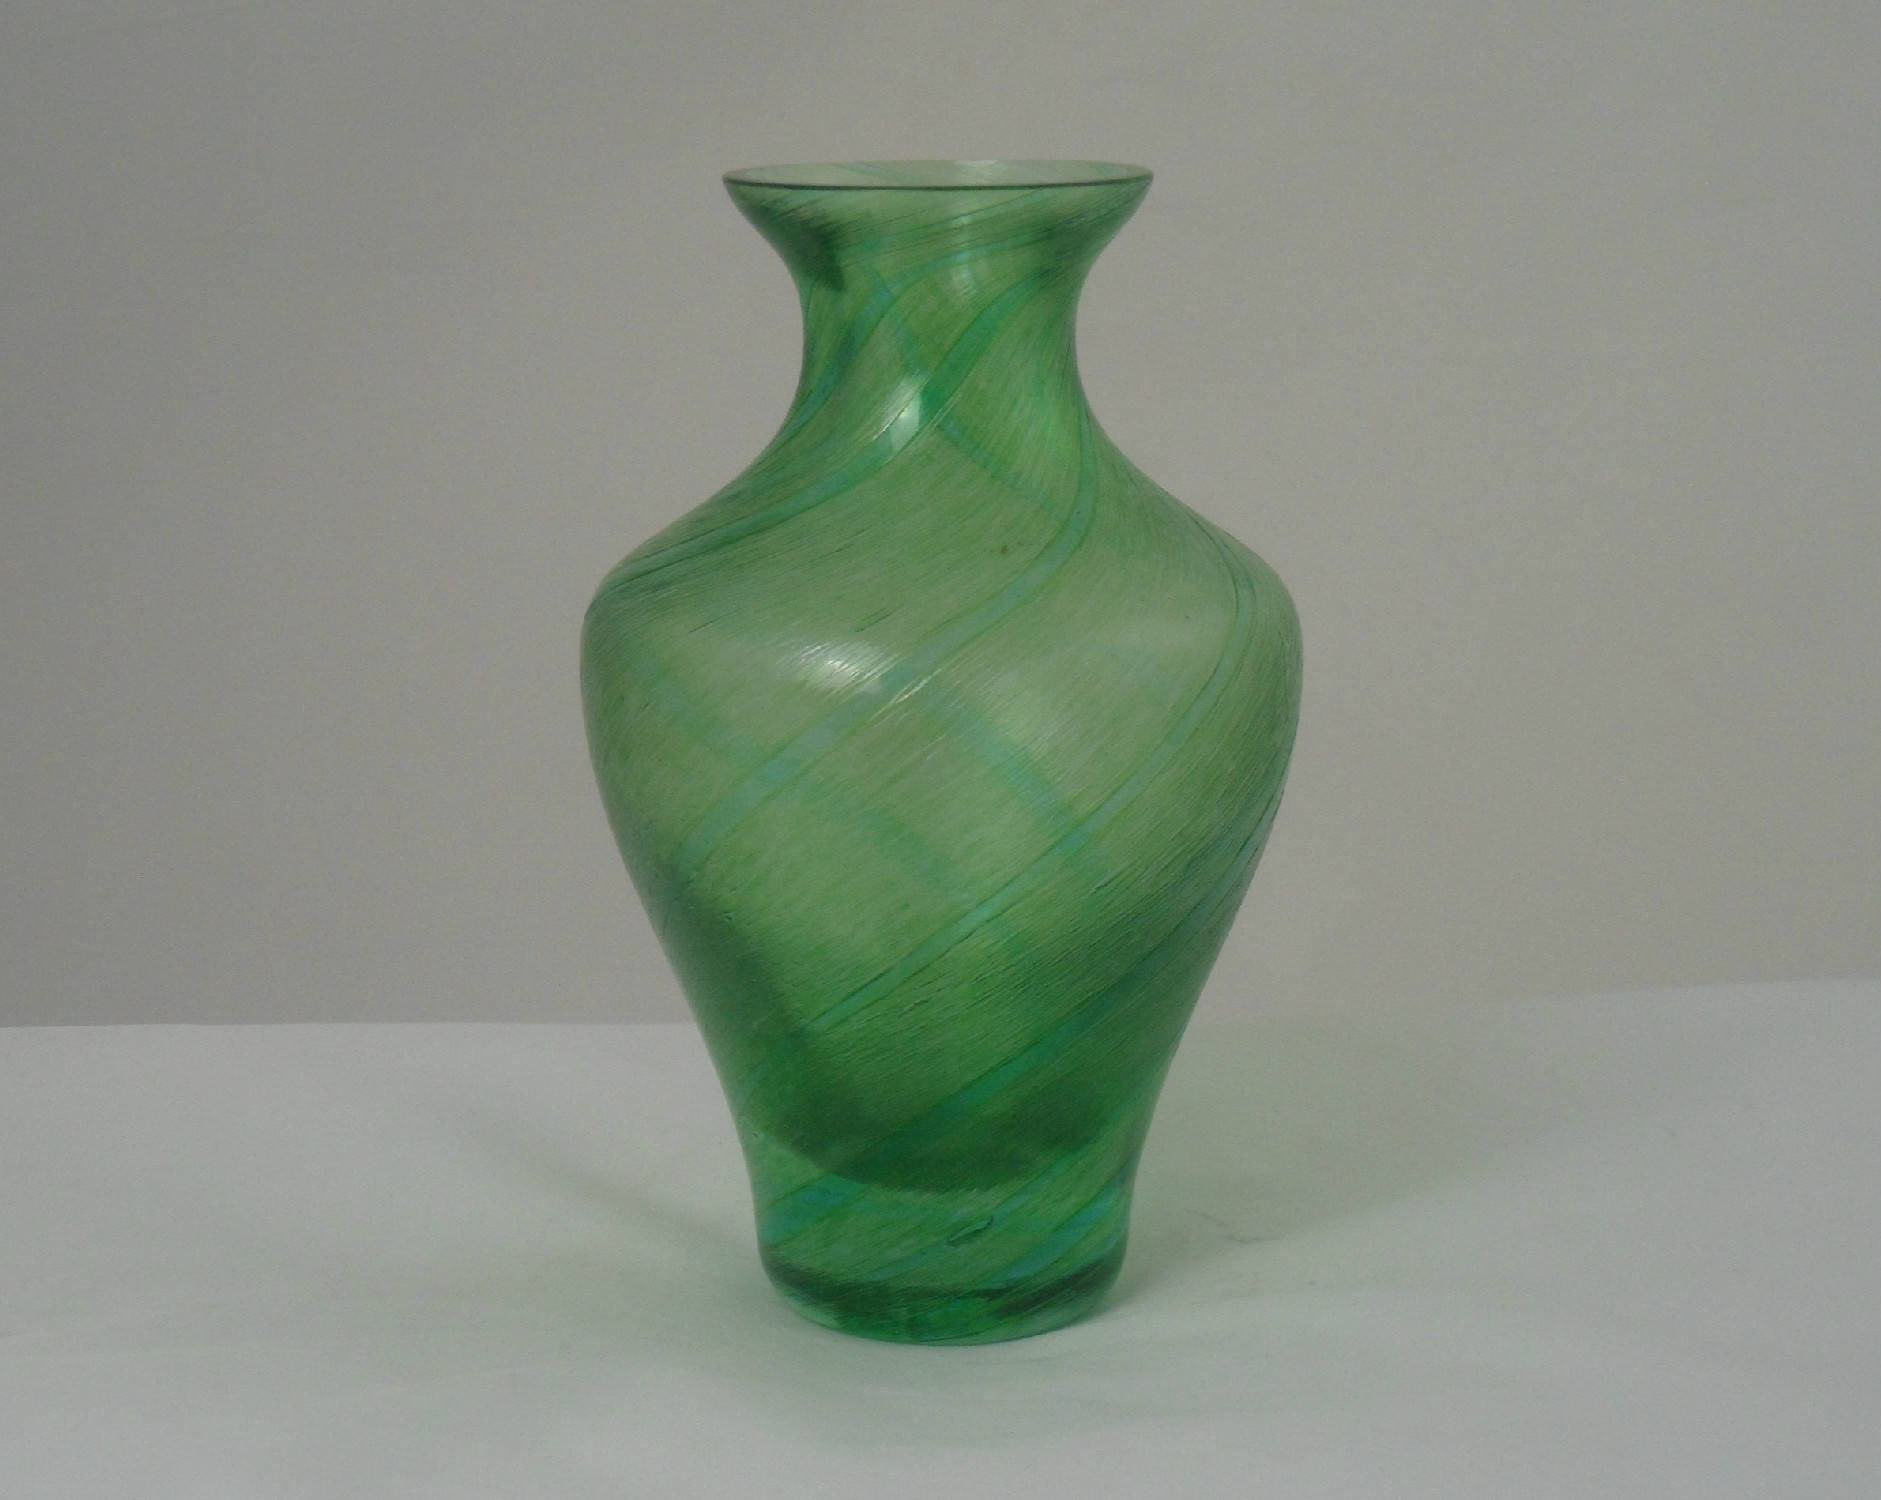 12 Wonderful Caithness Glass Vase 2024 free download caithness glass vase of caithness green glass vase green baluster vase with textured etsy regarding image 0